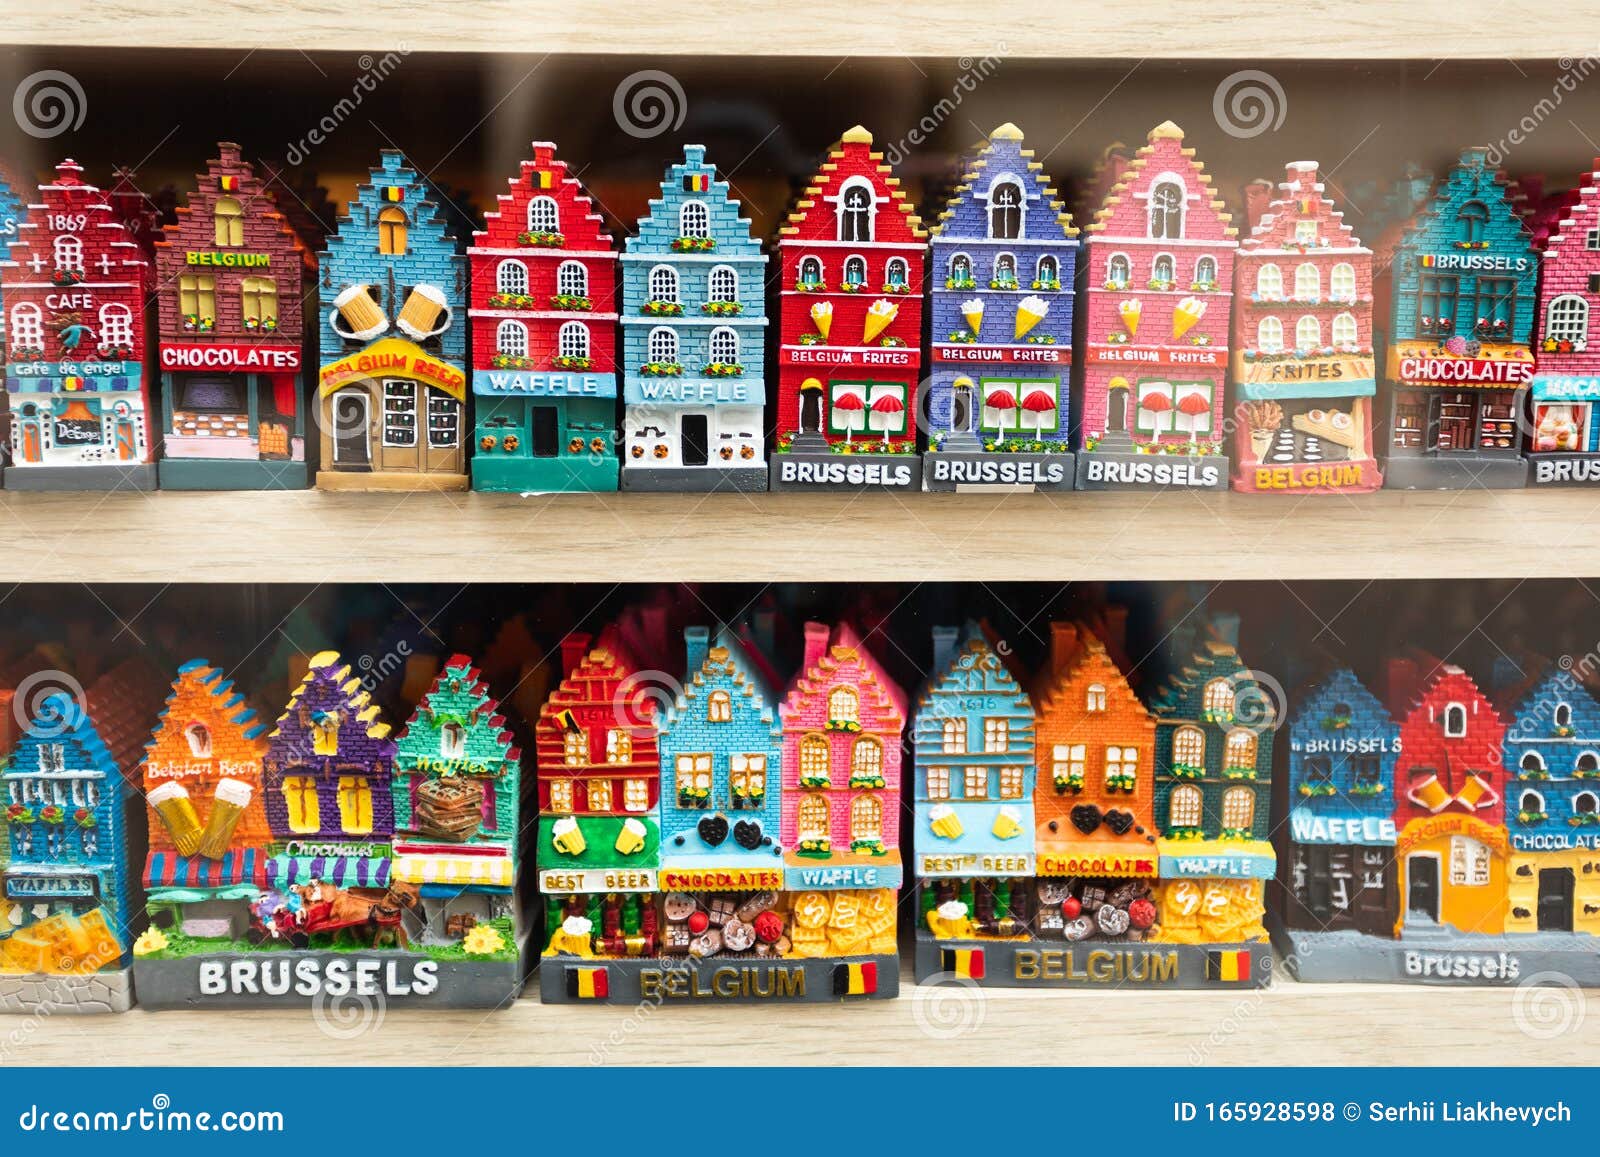 Brussels Travel Tourism Retro Look Christmas Ornament/Magnet/Dollhouse miniature